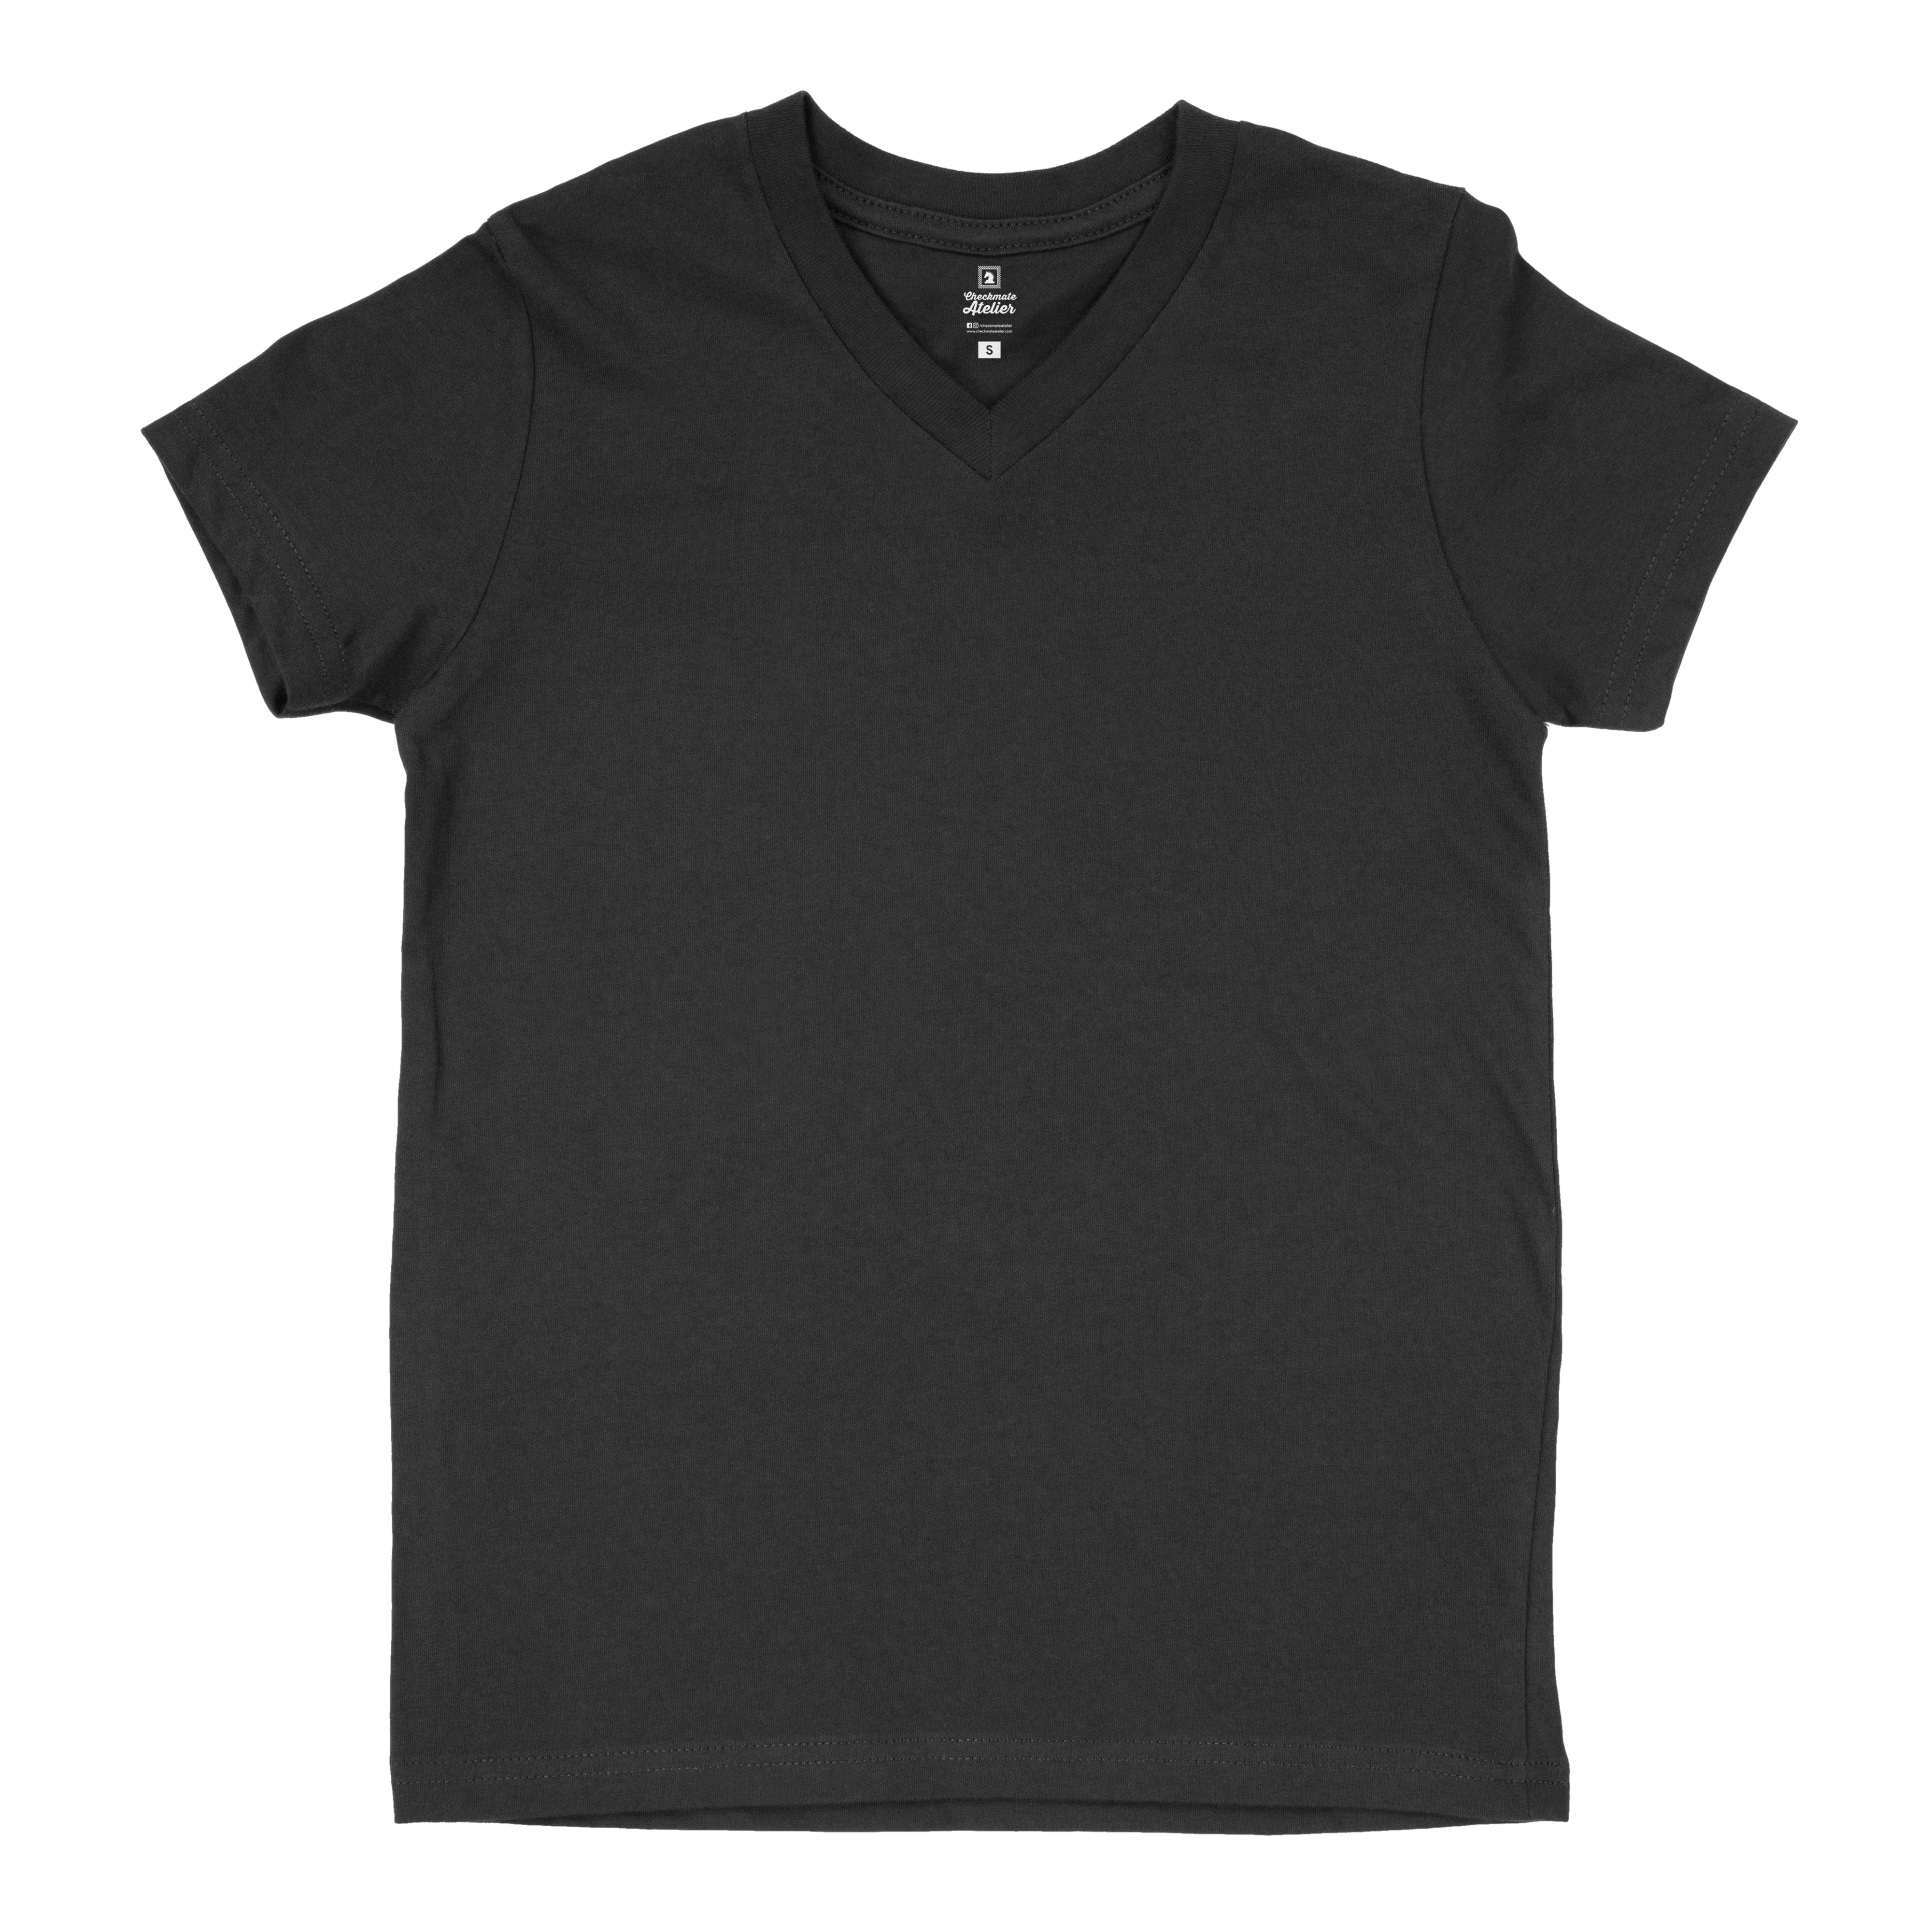 Black V-Neck T-Shirt - Shop Now - Checkmate Atelier